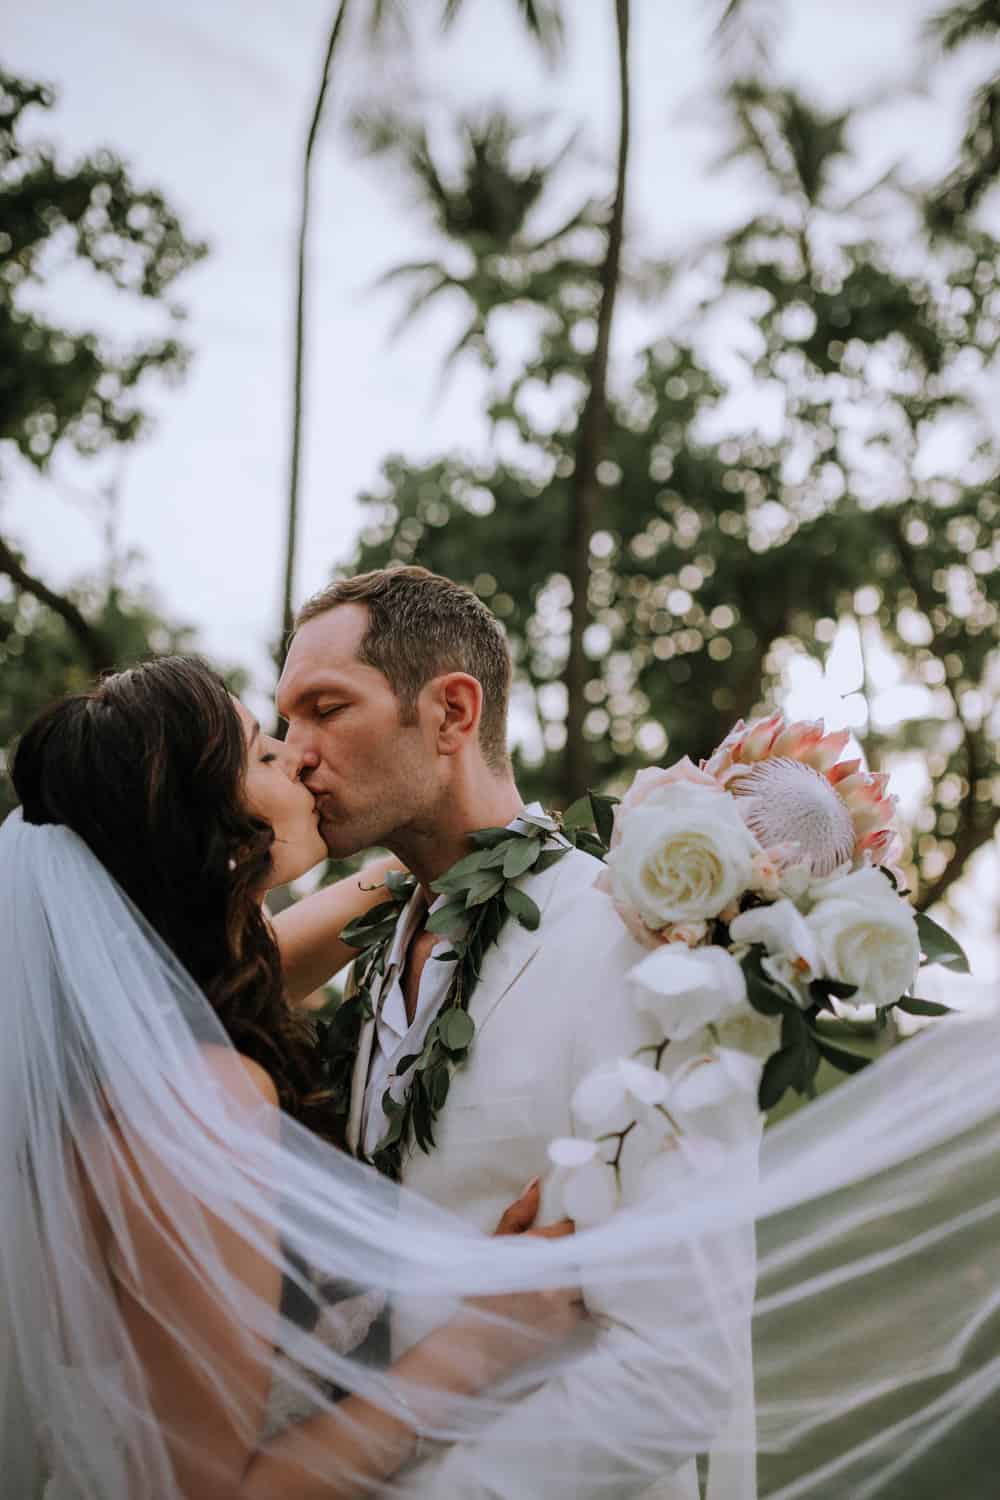 KUALOA RANCH SECRET ISLAND WEDDING VENUE PHOTO PRICES